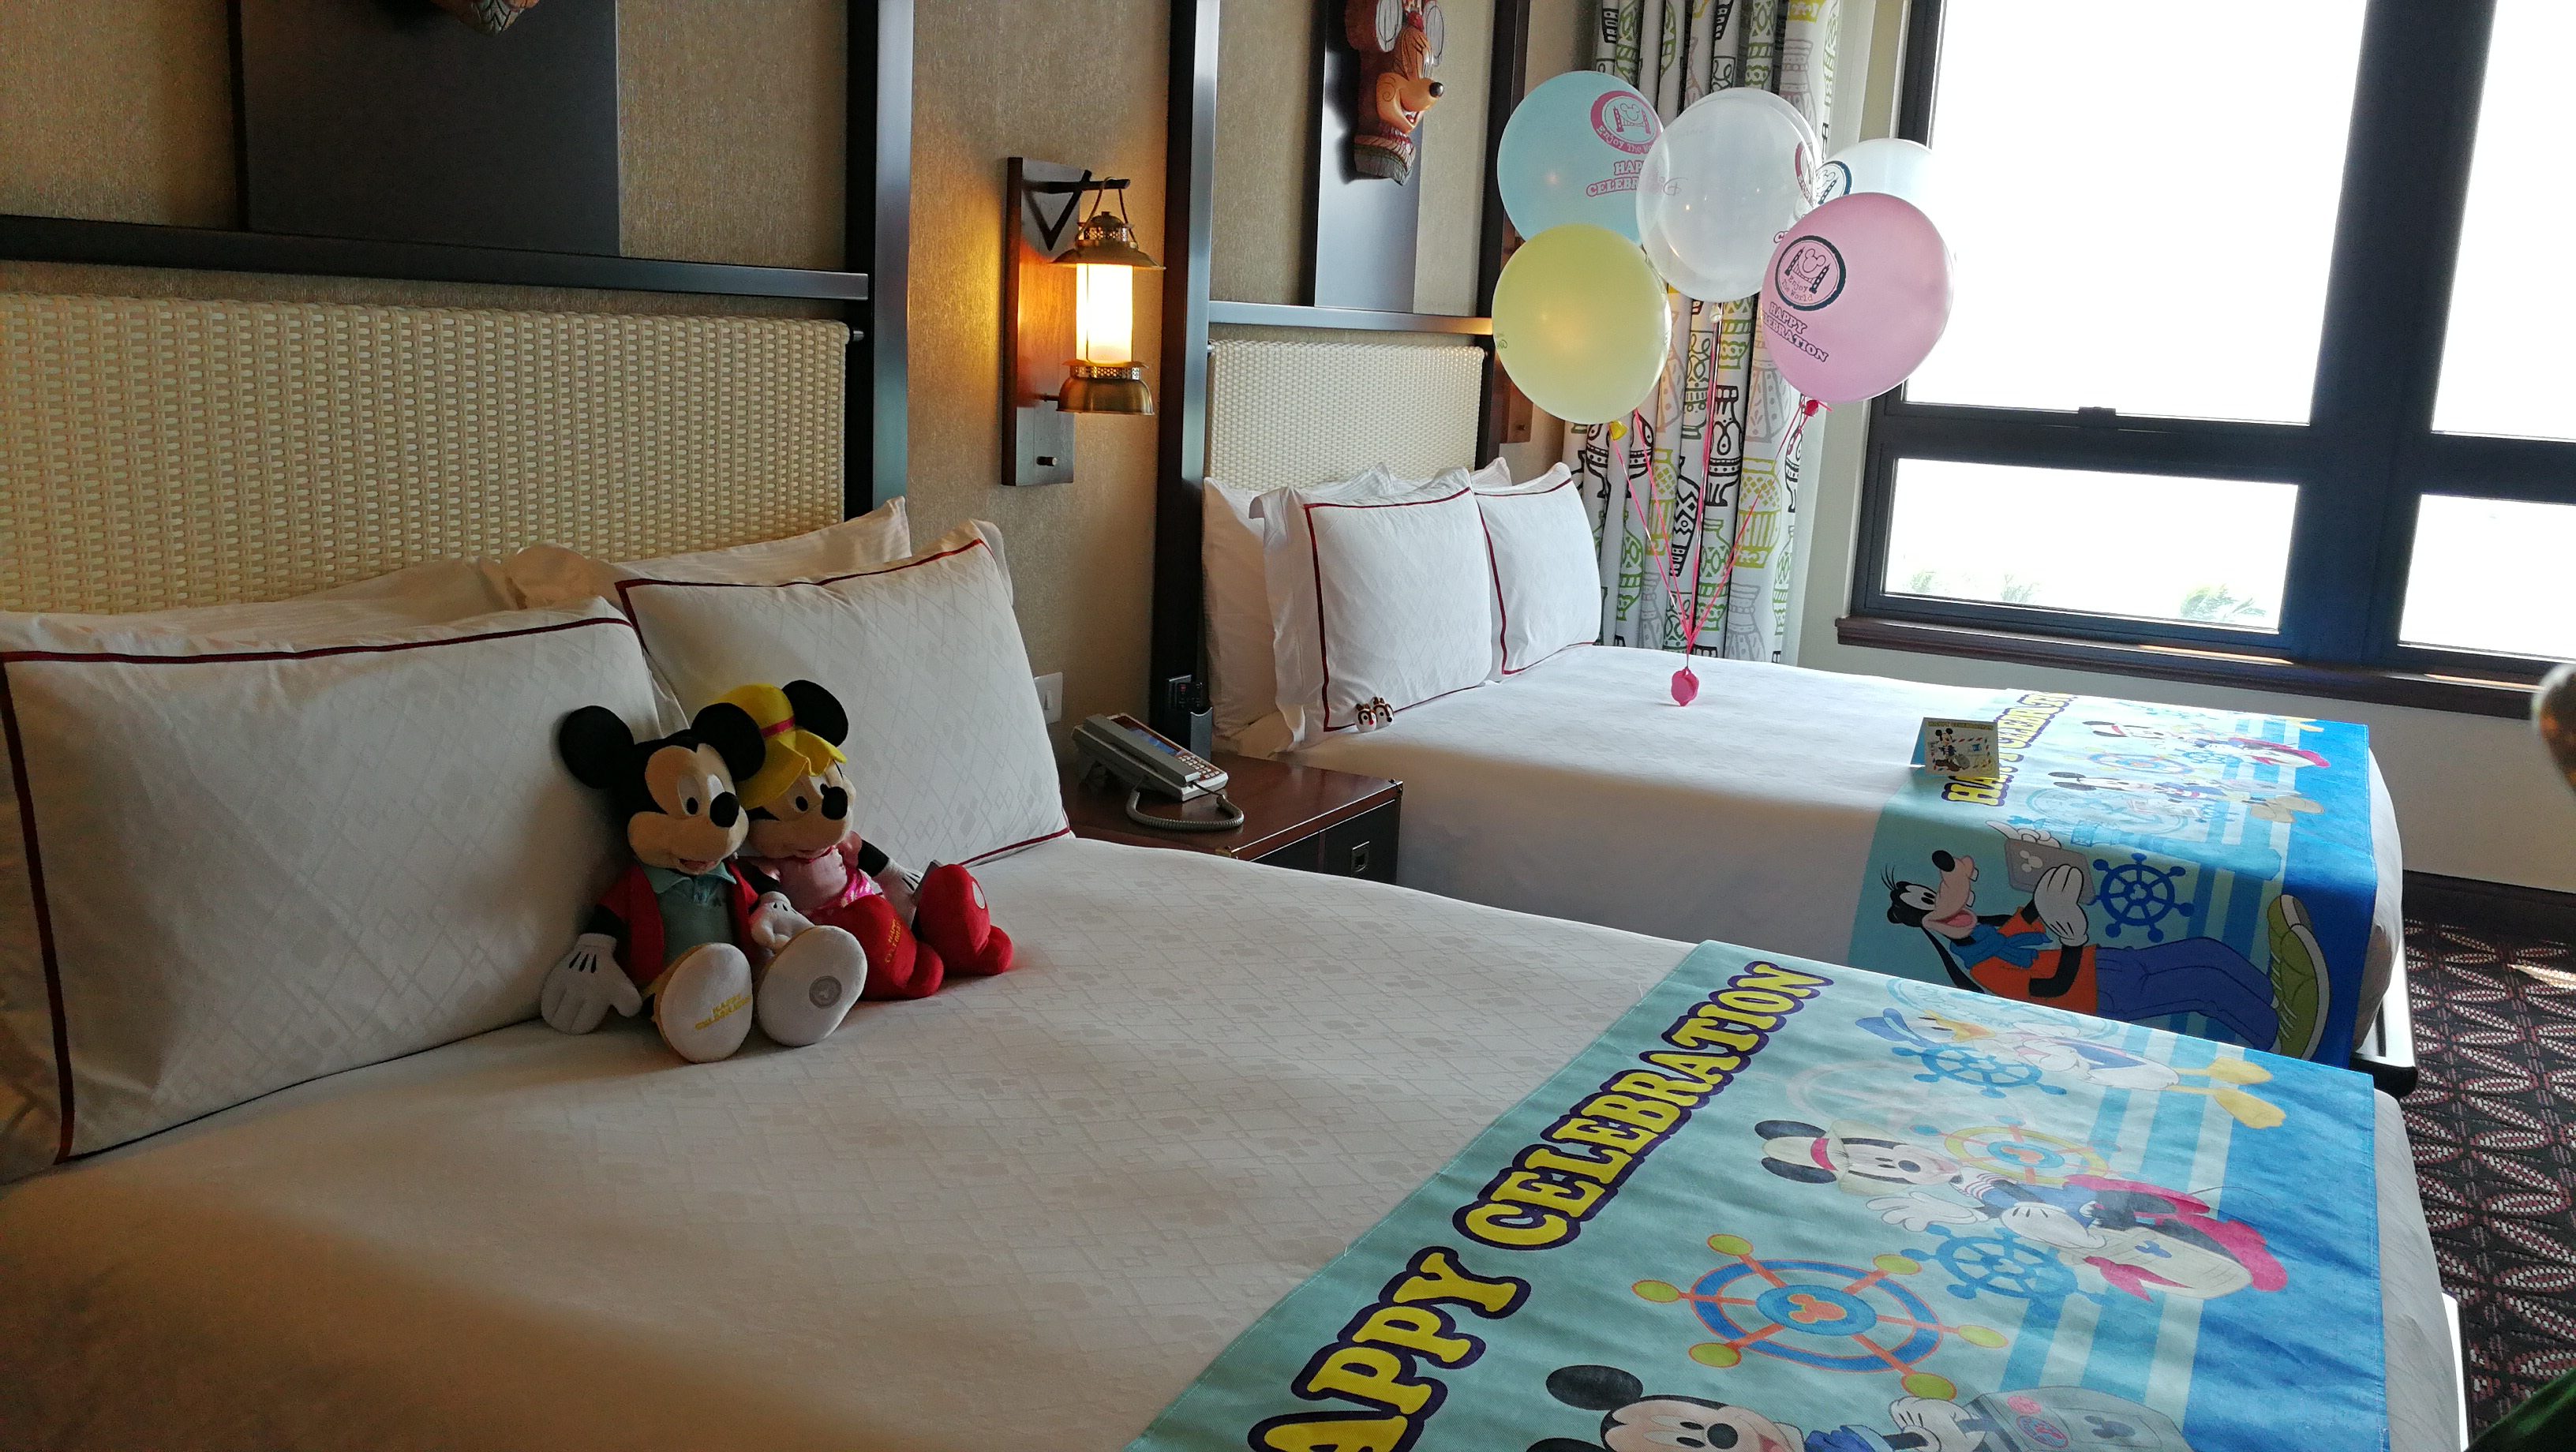 HONG KONG DISNEYLAND HOTEL. Rooms are extra festive with Mickey and Minnie. Photo by Earnest Mangulabnan Zabala/Rappler  